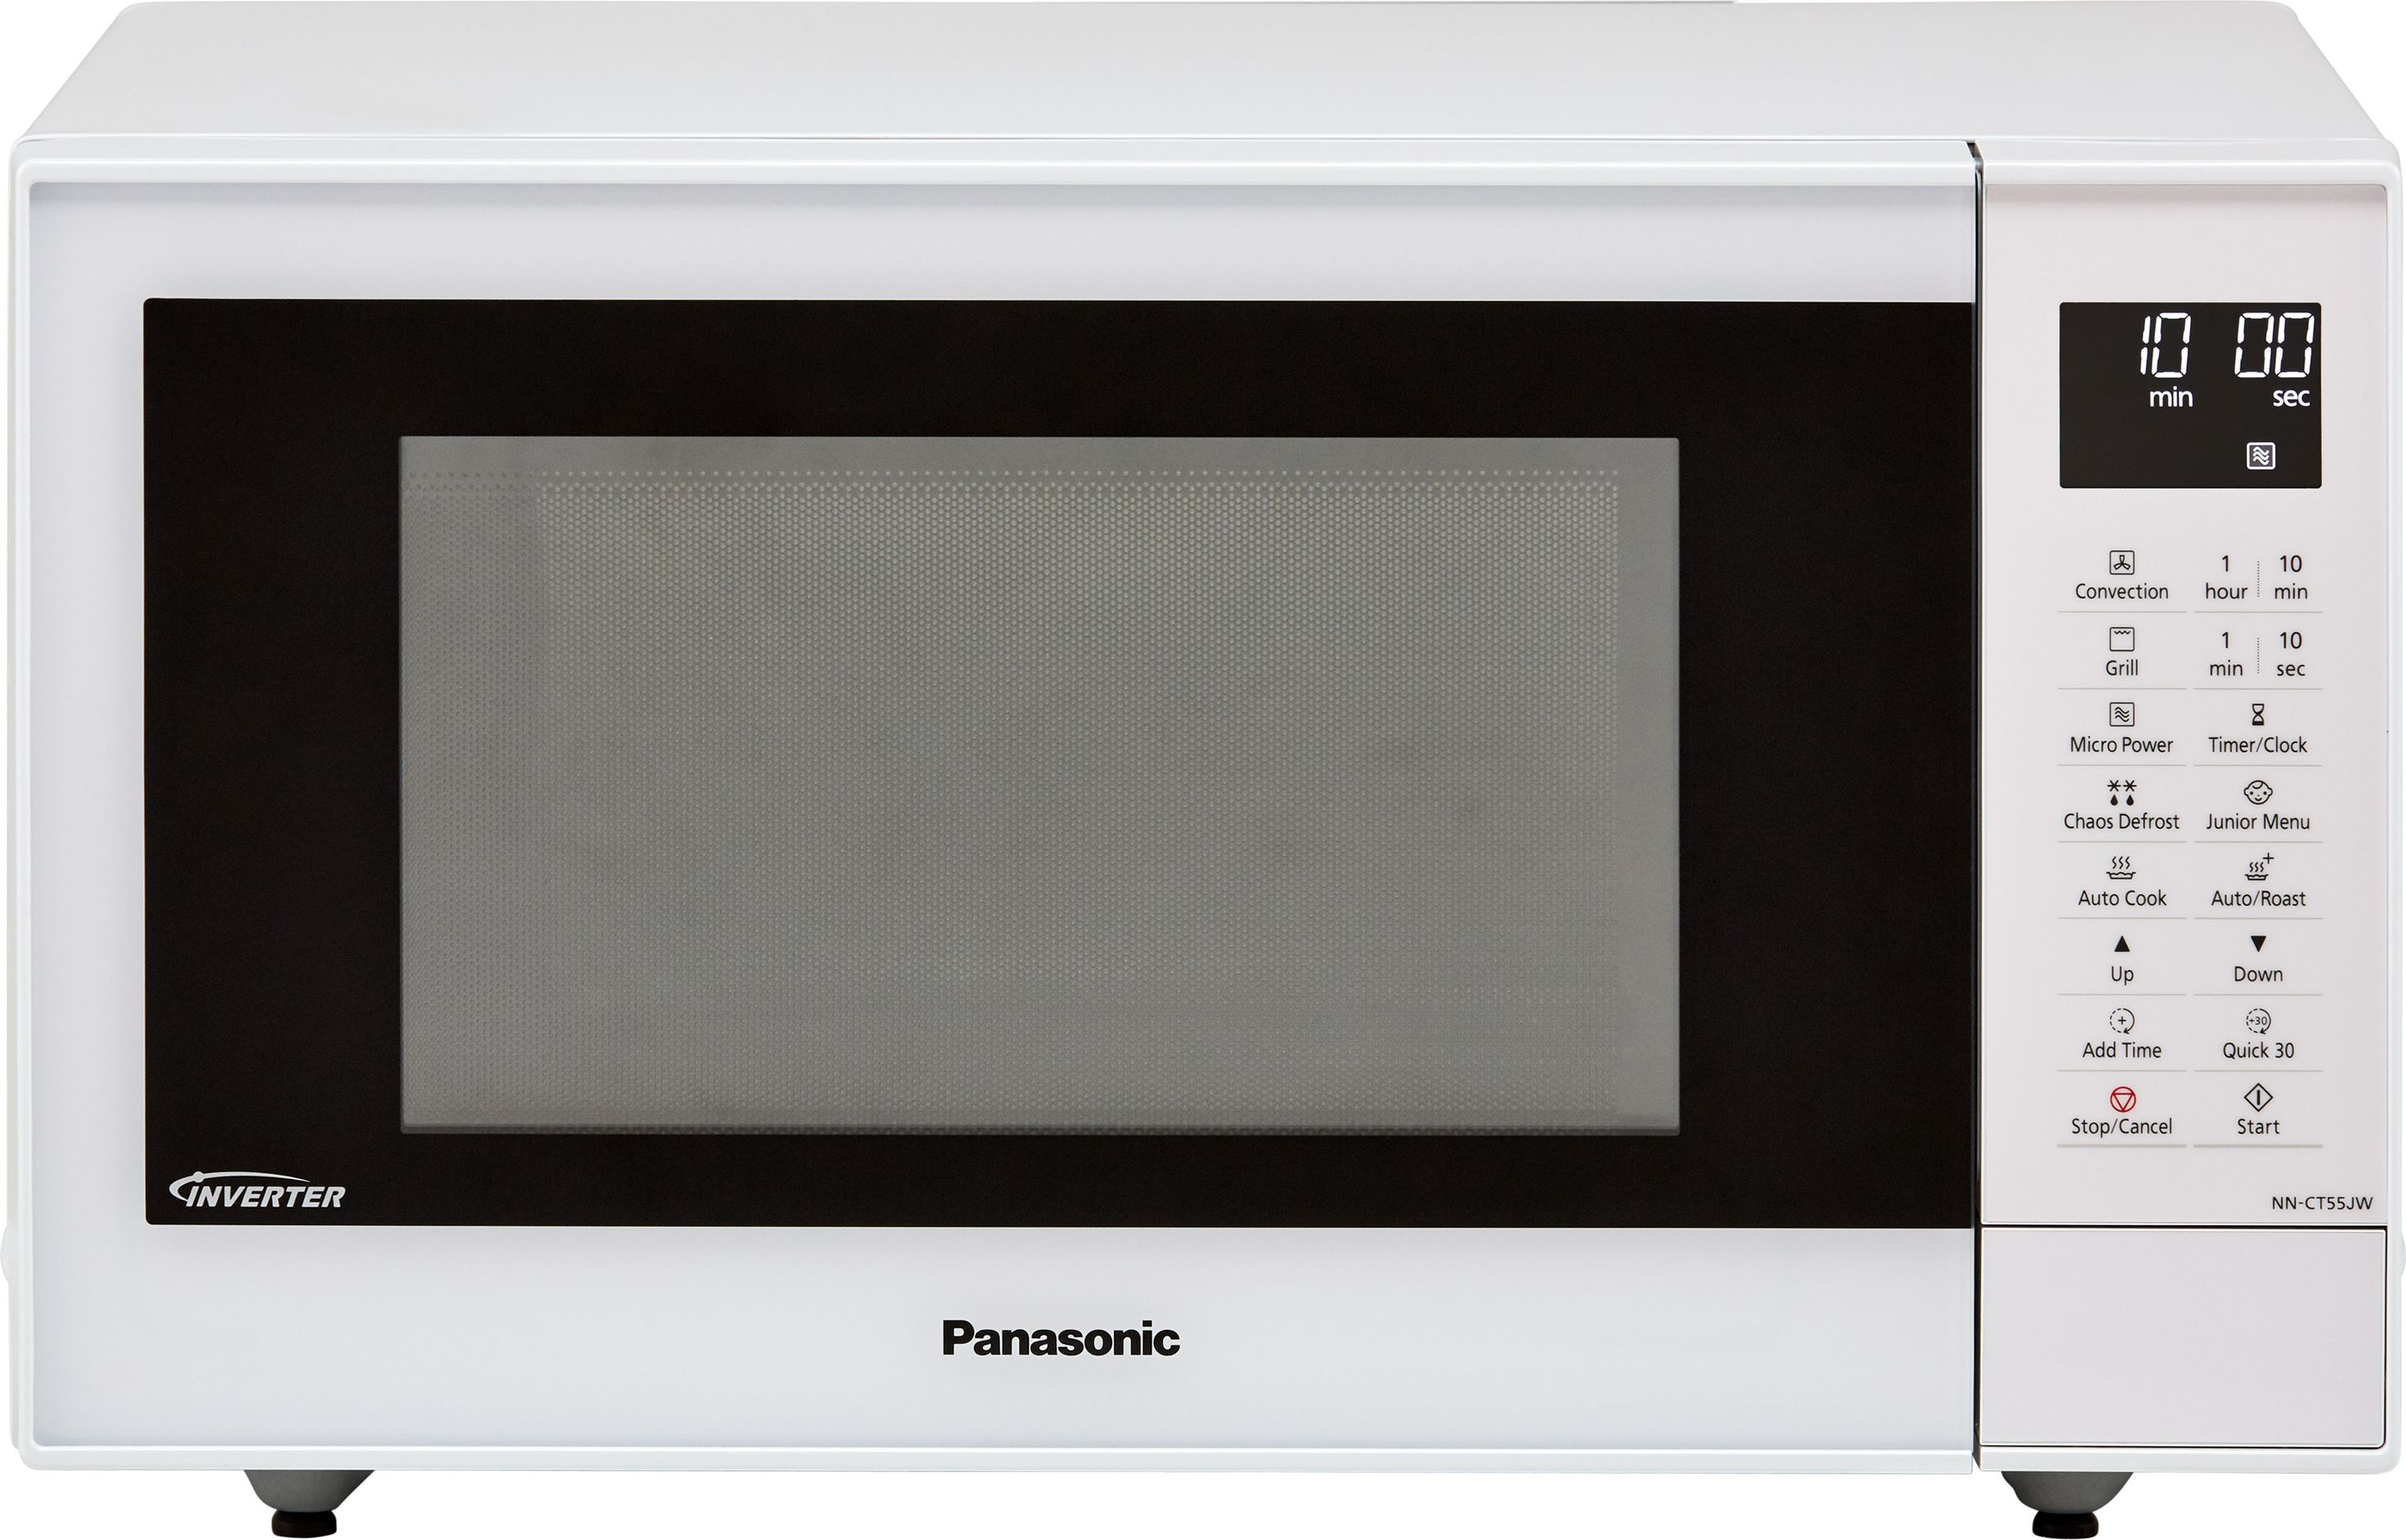 Panasonic NN-CT55JWBPQ 31cm tall, 52cm wide, Freestanding Microwave - White, White